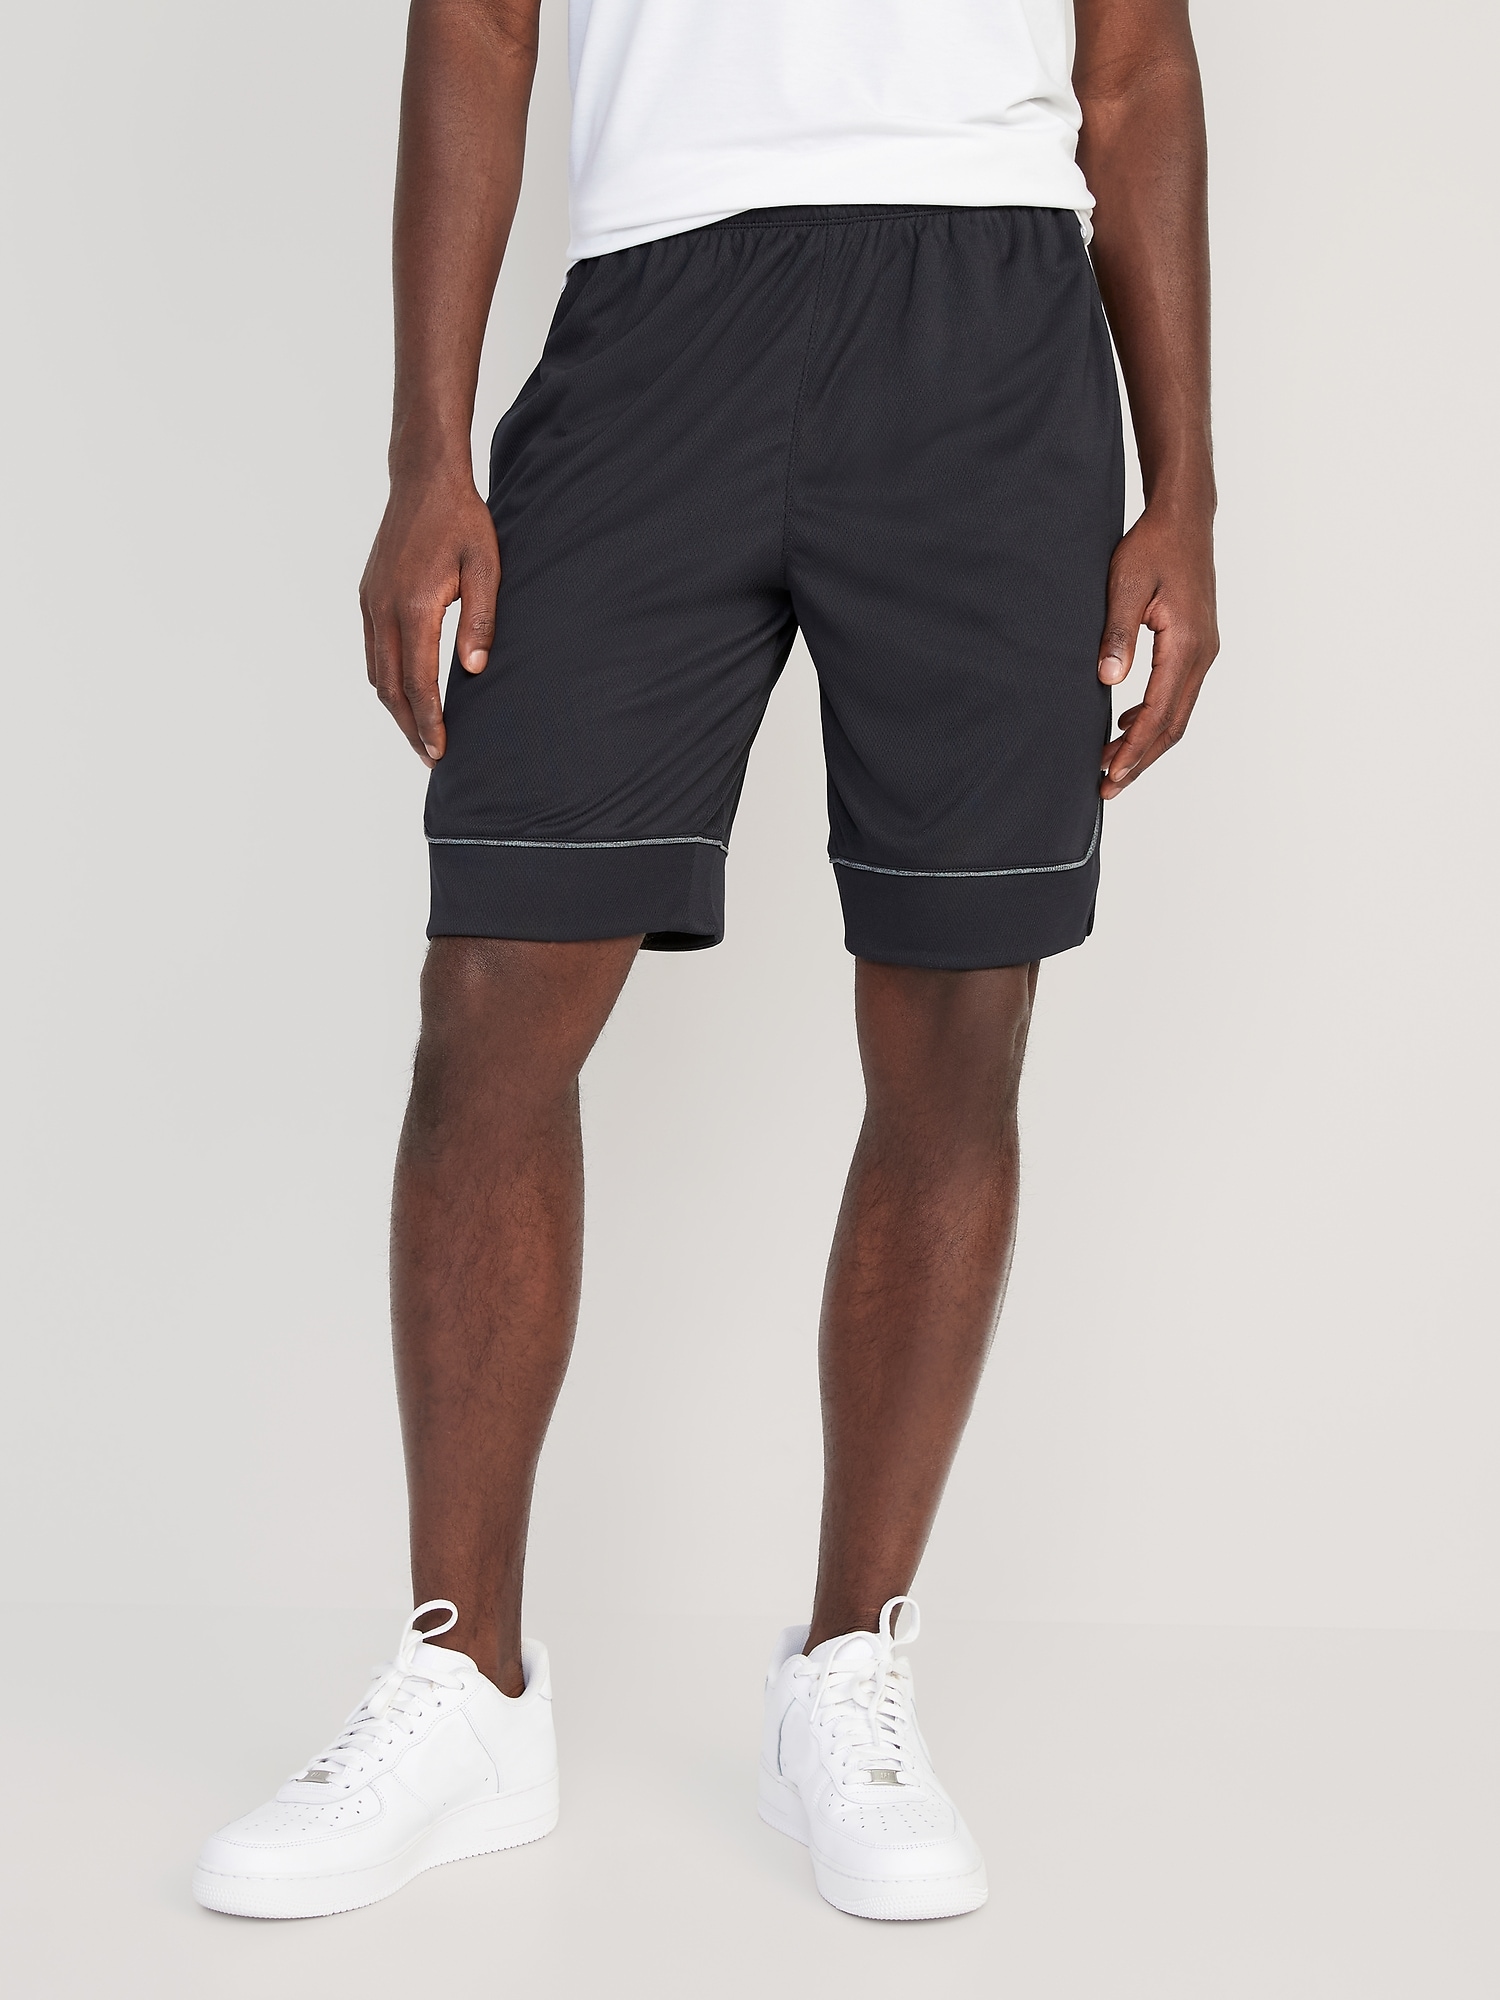 Mesh Basketball Shorts -- 10-inch inseam